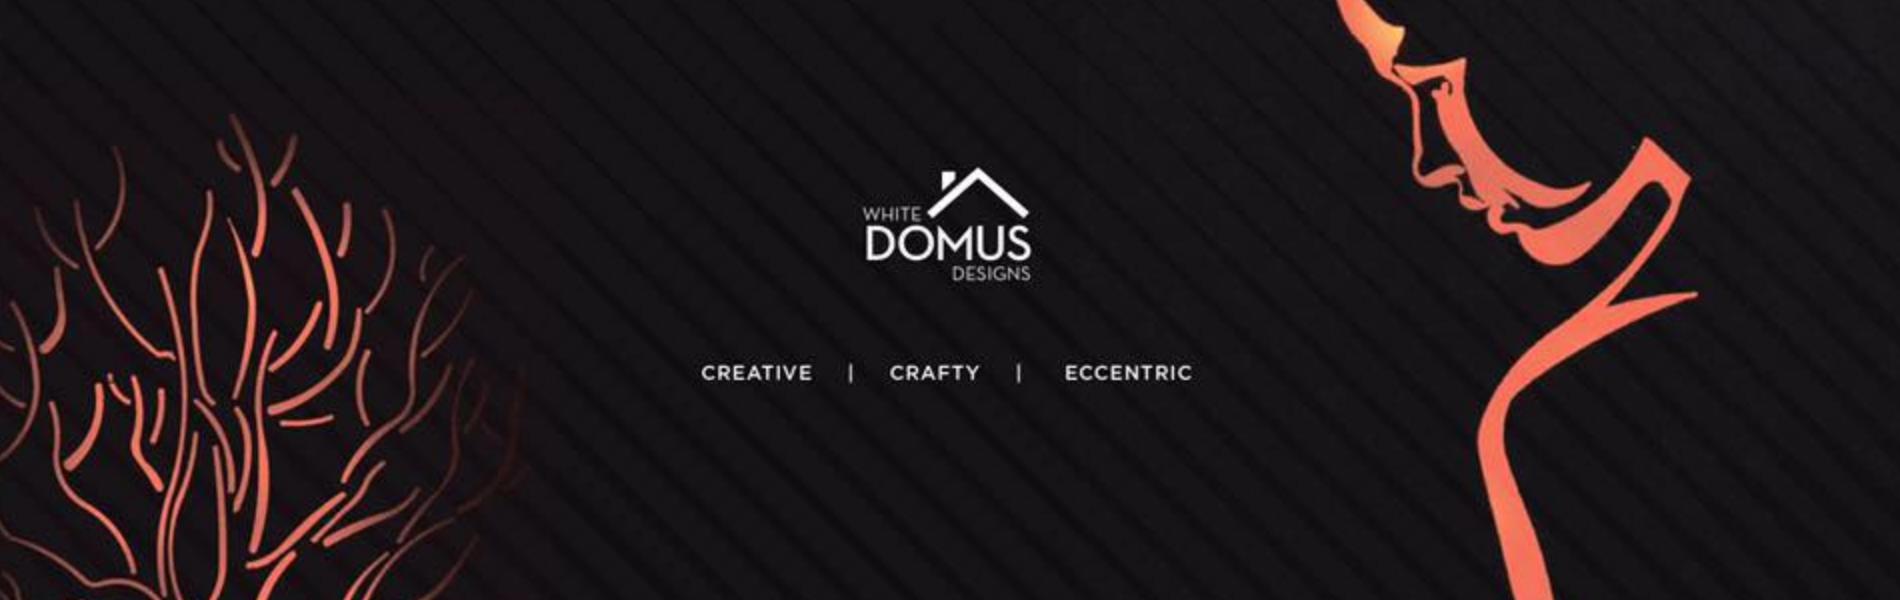 White Domus Designs